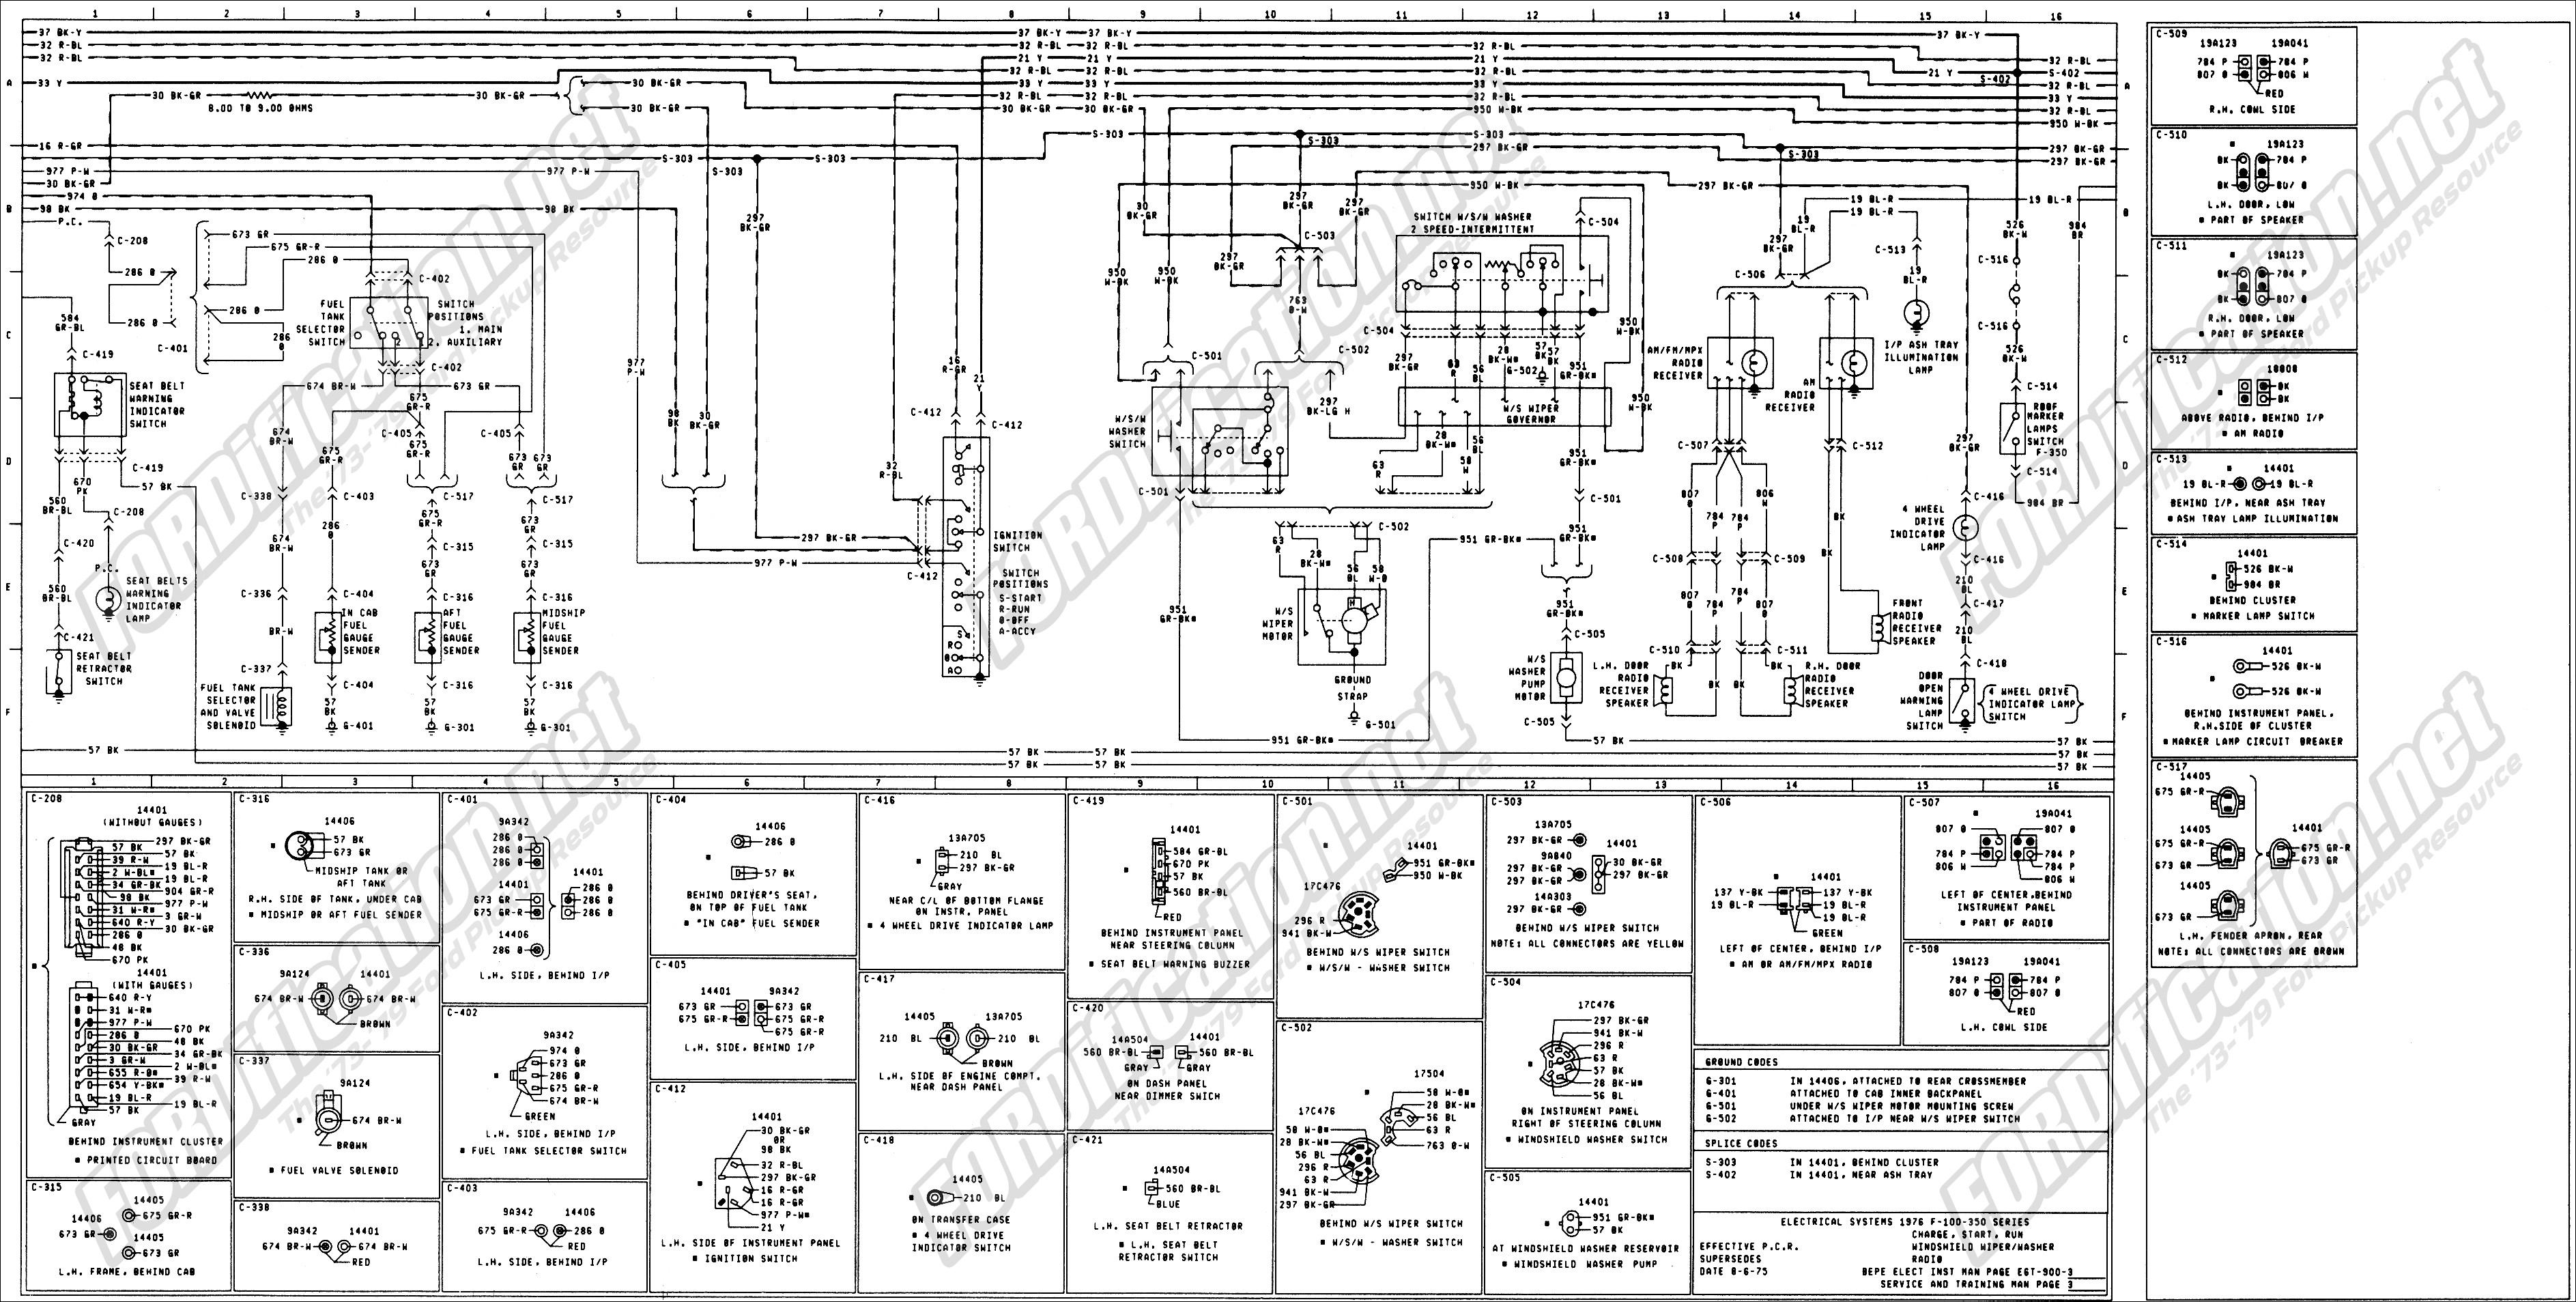 2009 Ford F150 Wiring Diagram from detoxicrecenze.com